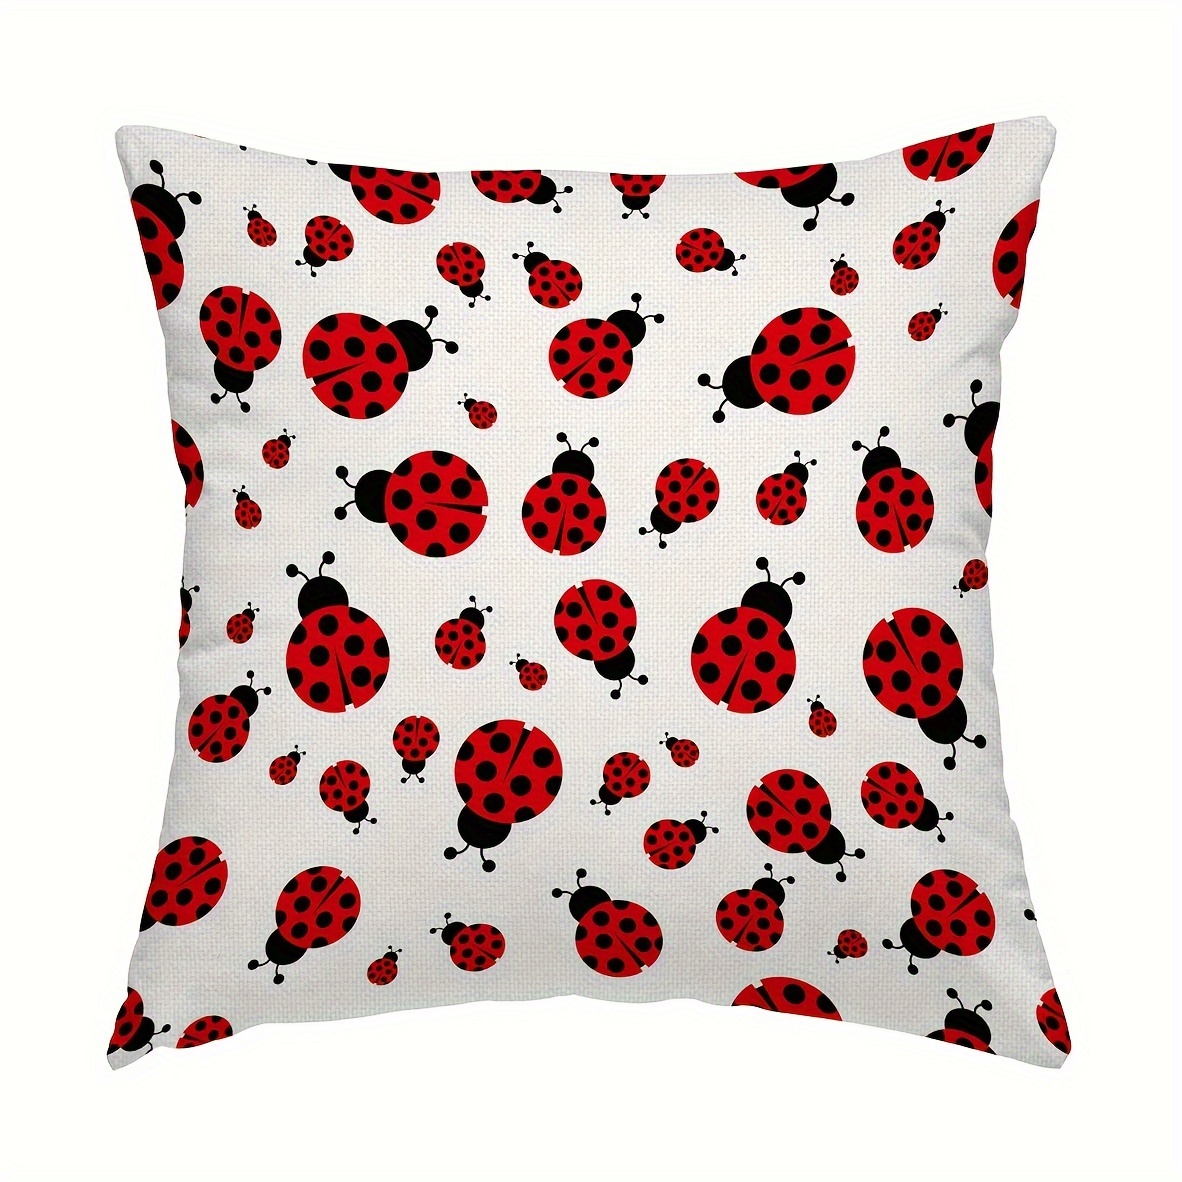 

1pc Ladybug Throw Pillow Cover, Decorative Pillow Case Home Decor Square 18*18 Inches Pillowcase, For Room, Sofa, Chair, Soft Plush Pillowcase